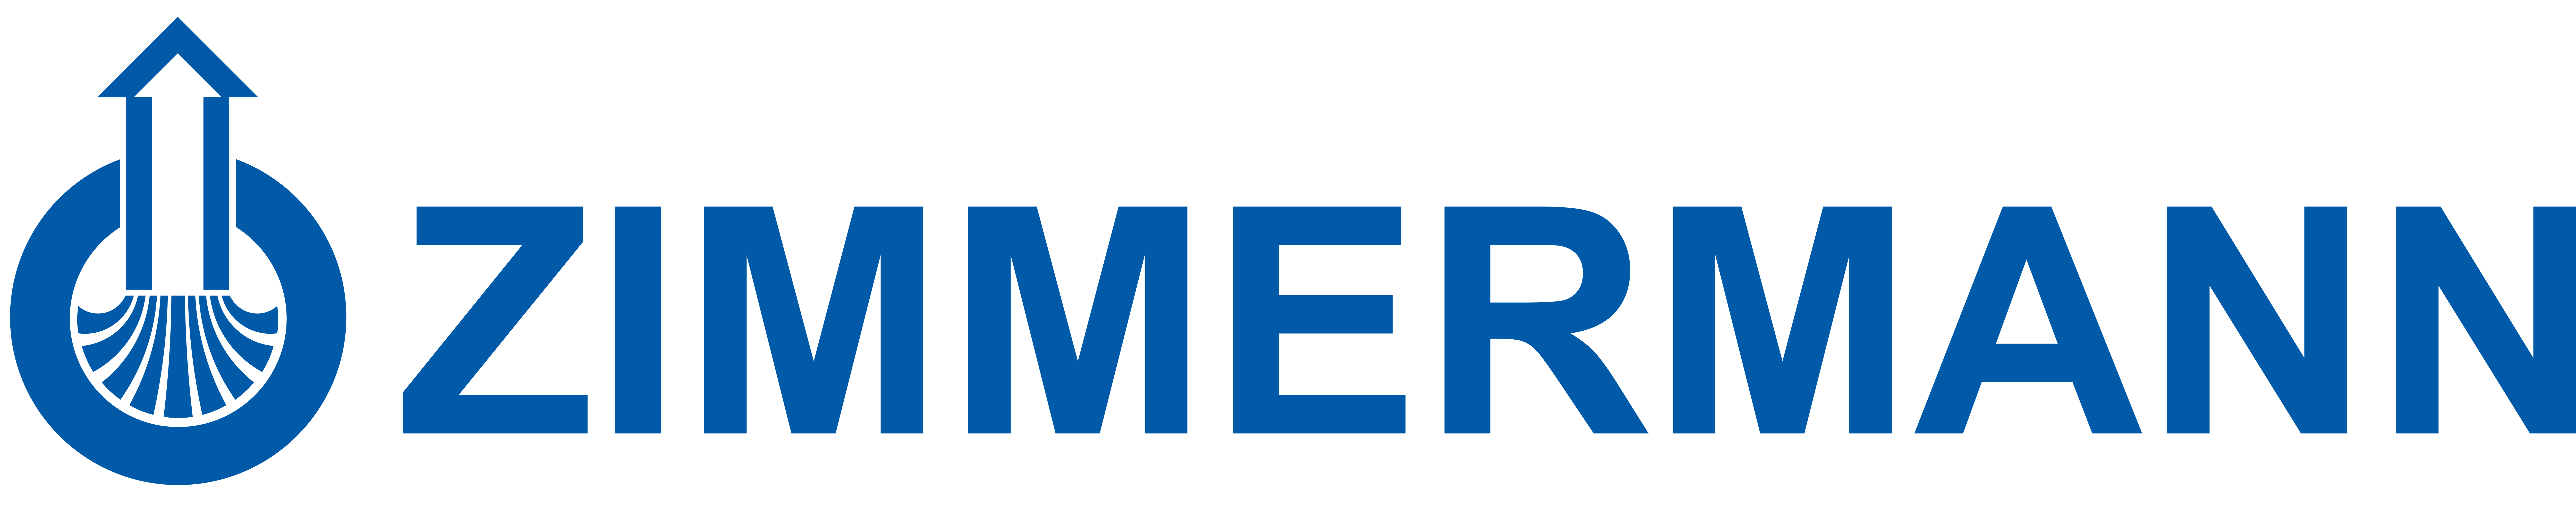 Zimmermann ZI Logo ohne Claim